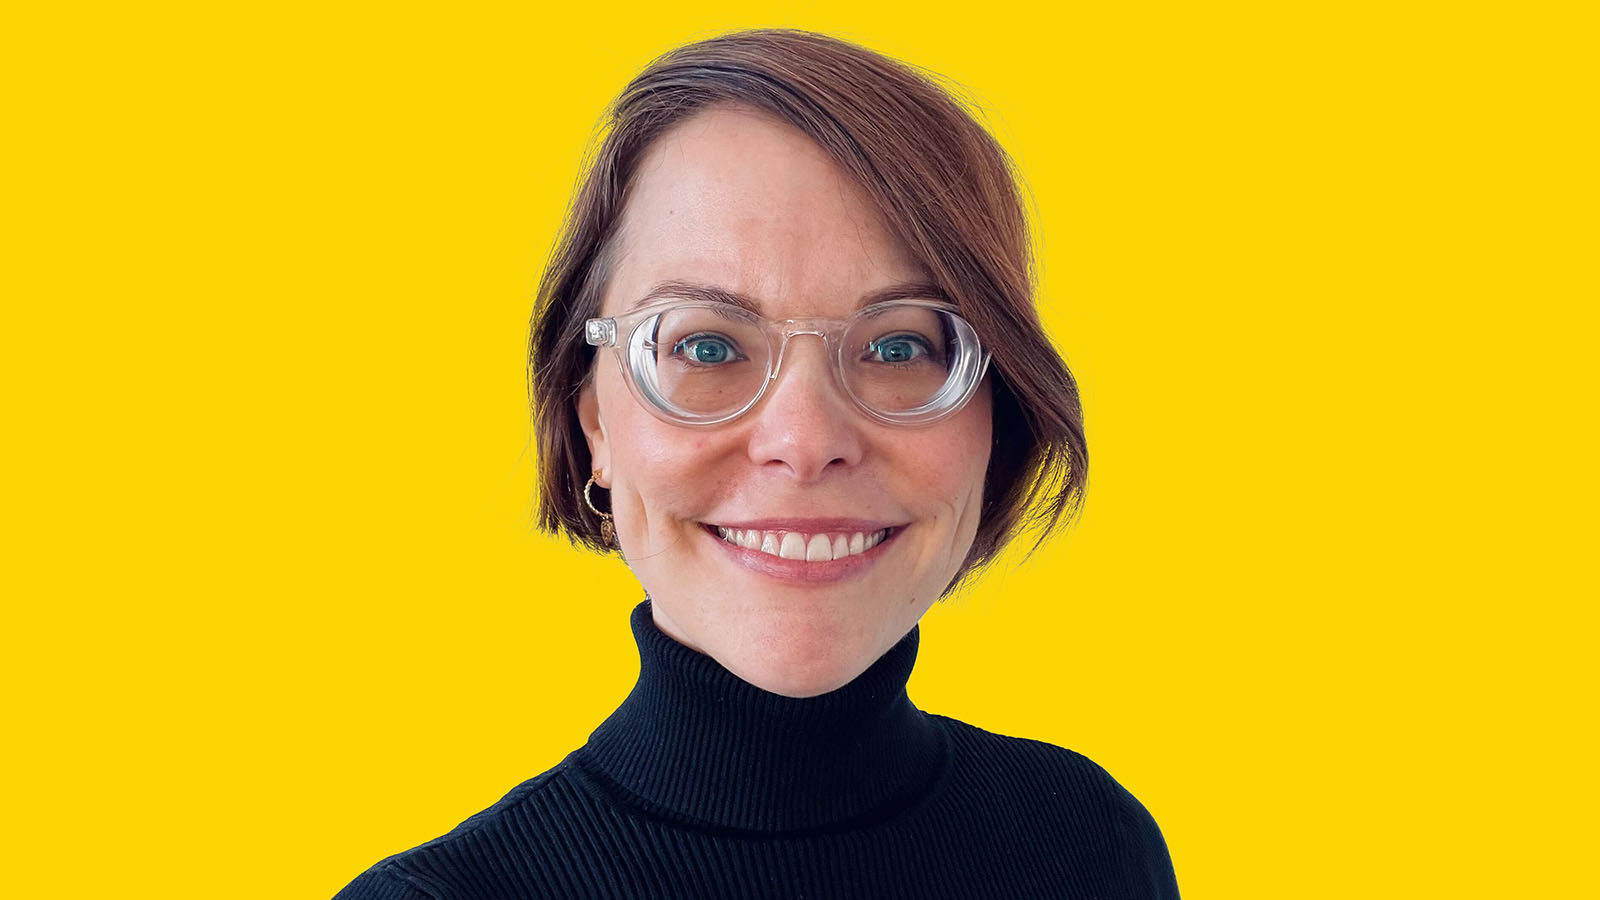 Birgit-Wunder-portrait-yellow-1